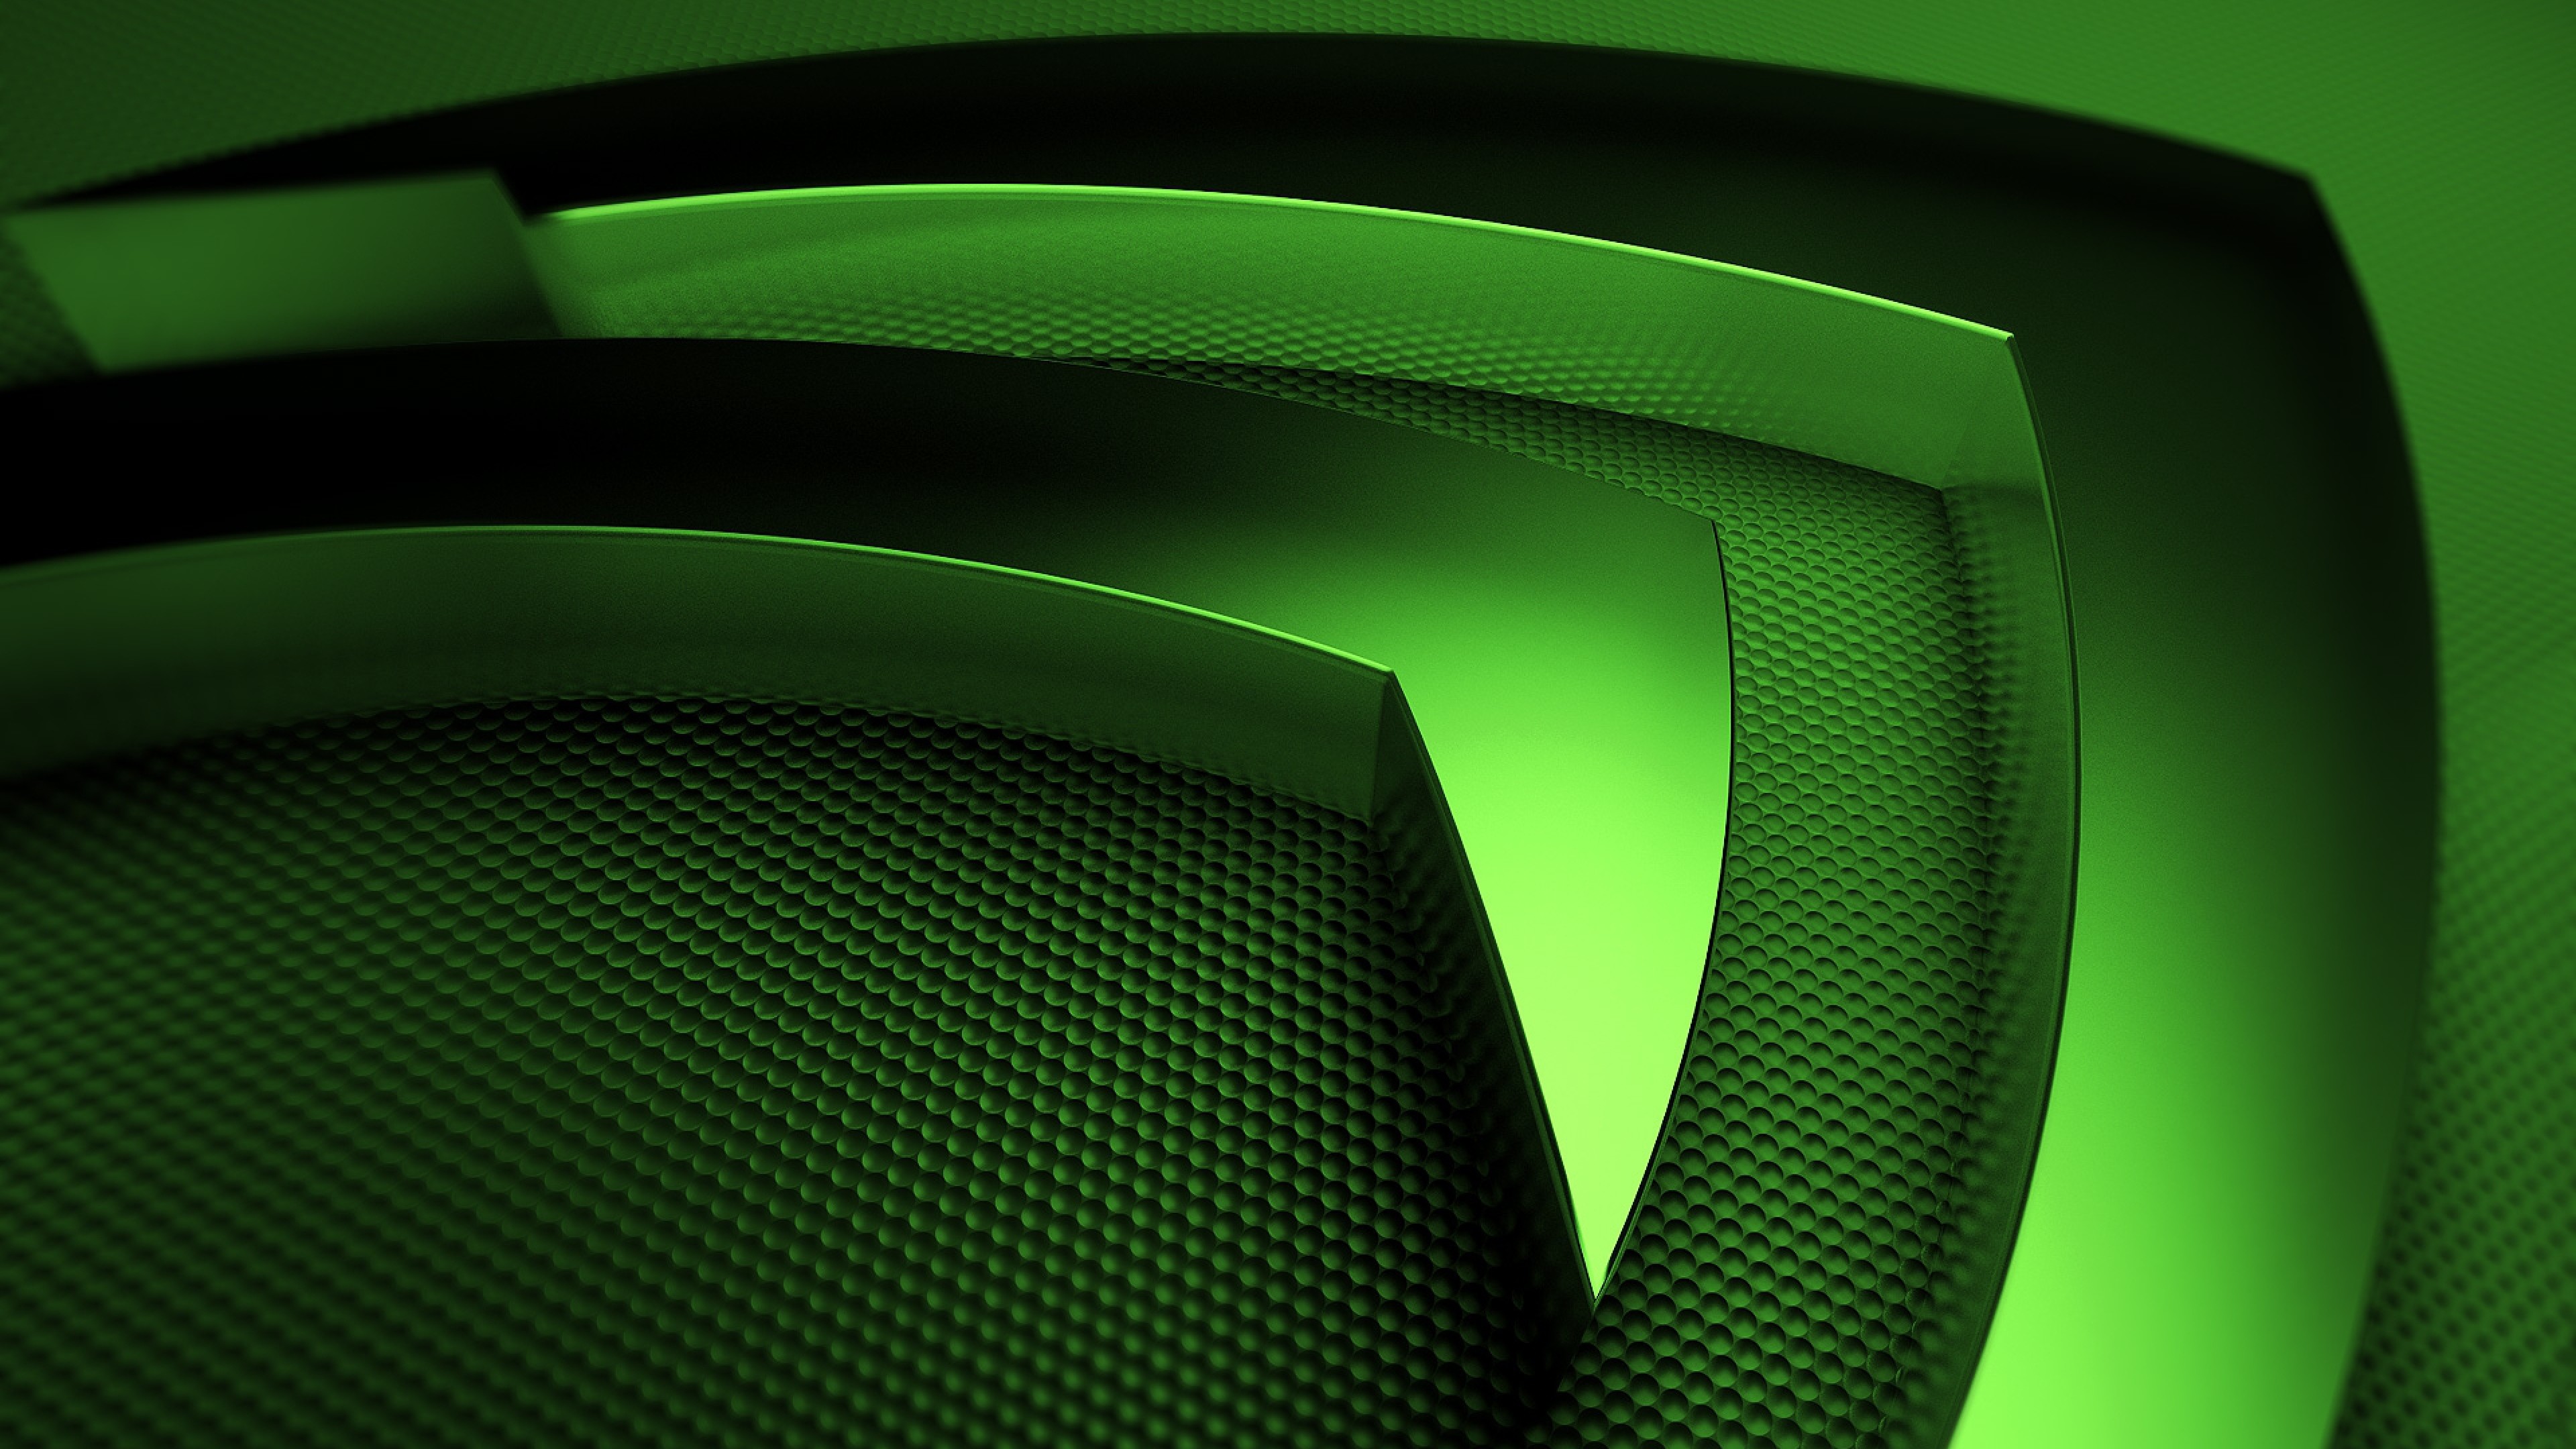 nvidia wallpaper 4k,green,automotive design,font,personal protective equipment,macro photography